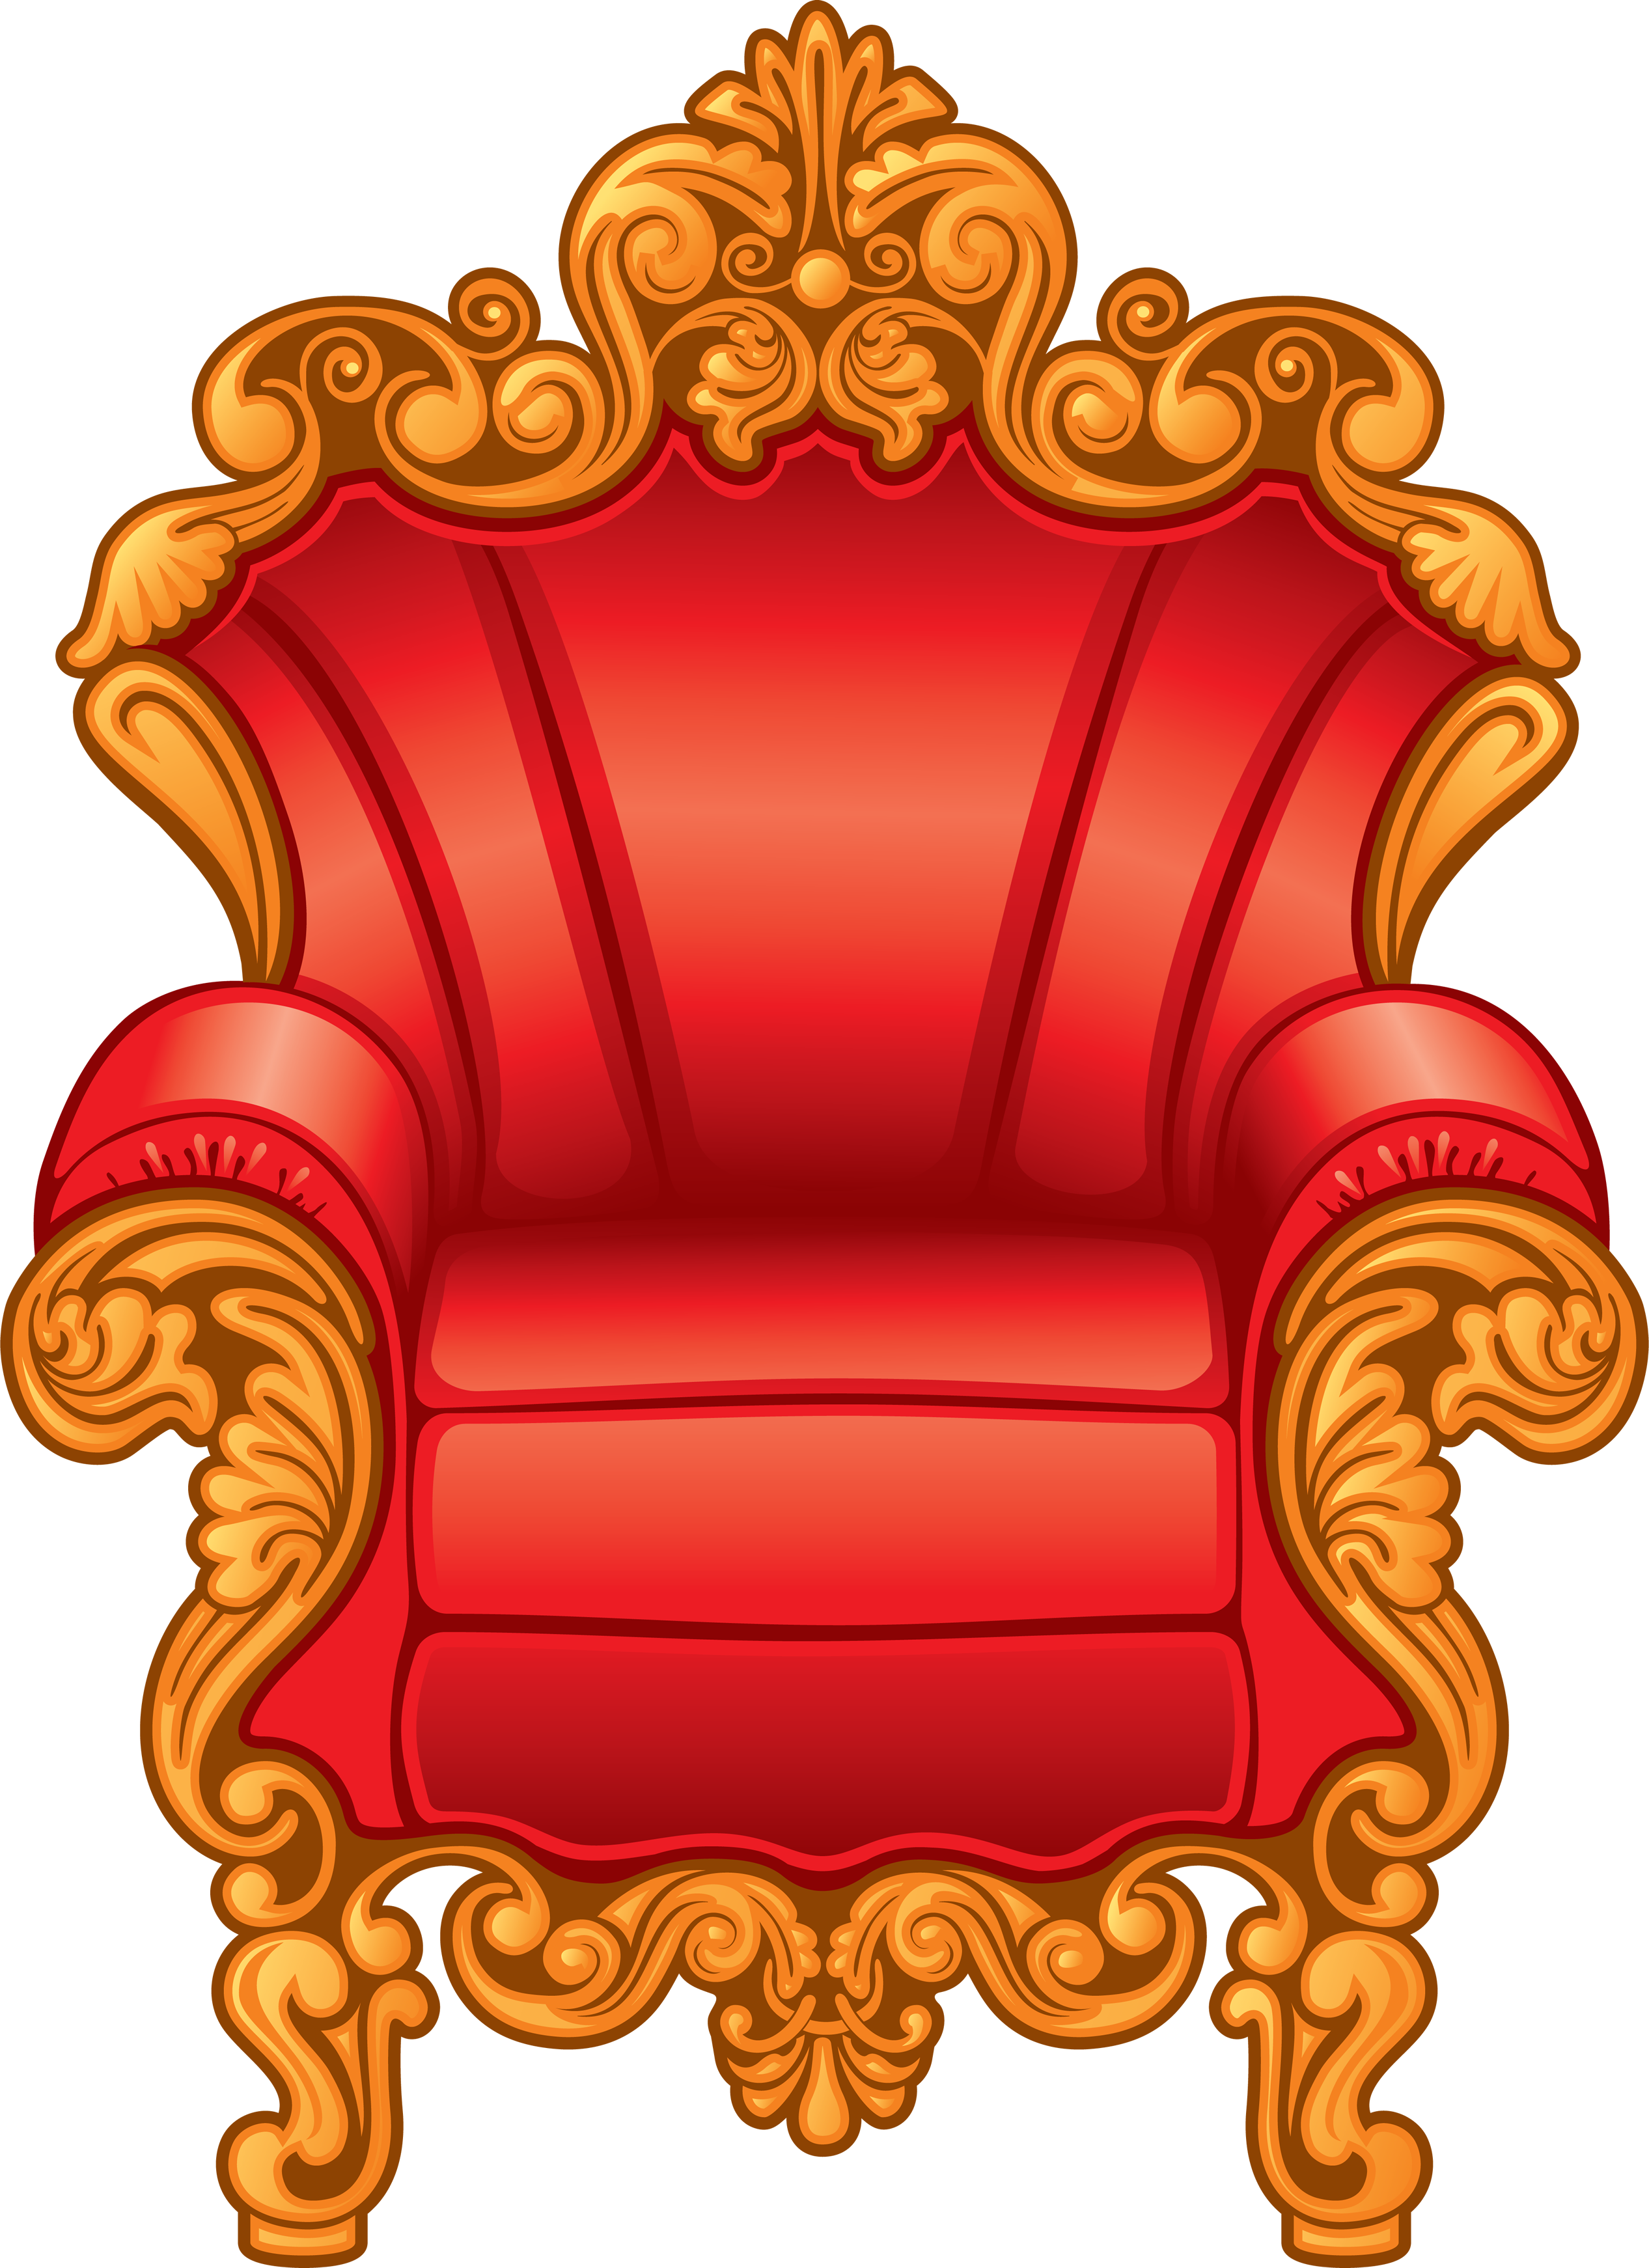 Regal Red Golden Throne Illustration